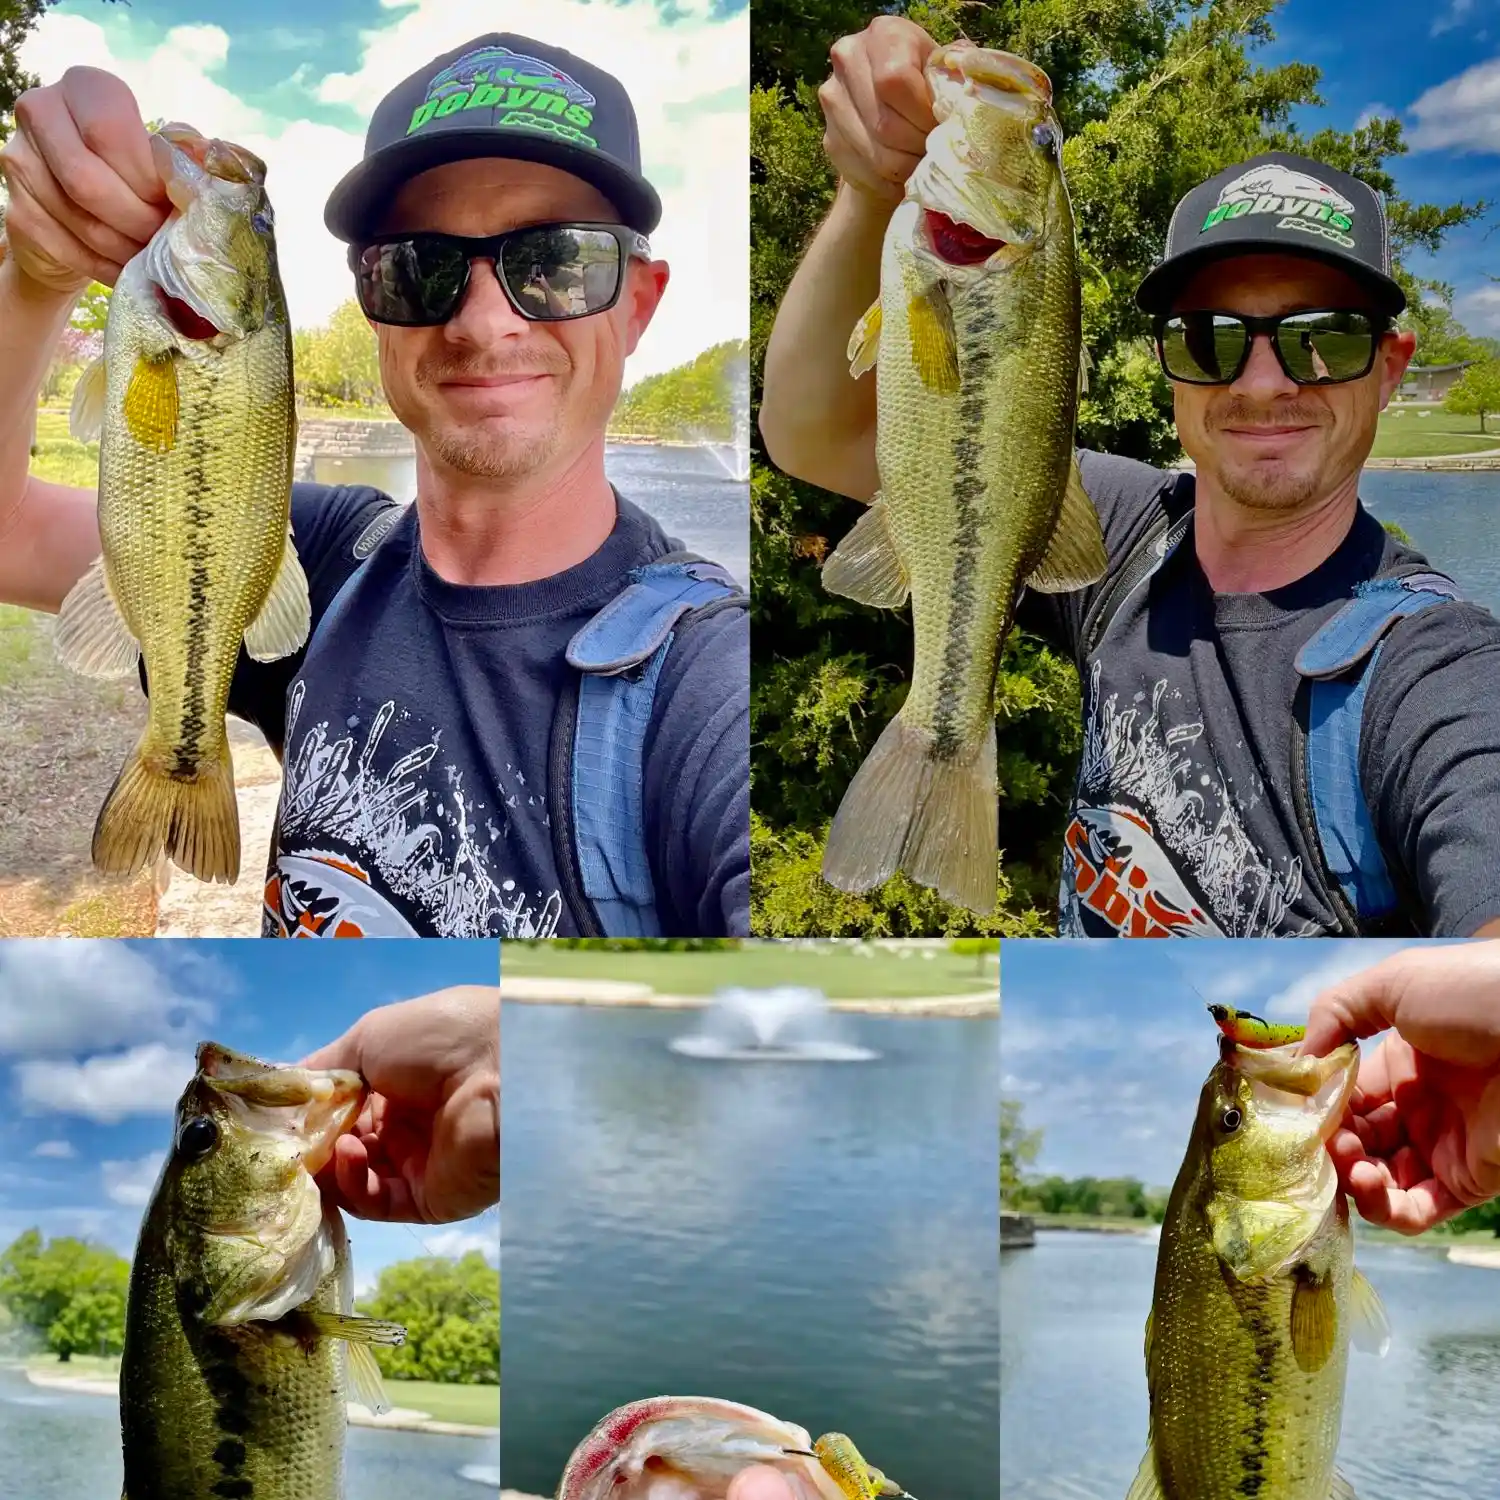 ᐅ Olathe Kansas City Road Park Pond fishing reports🎣• Olathe, KS